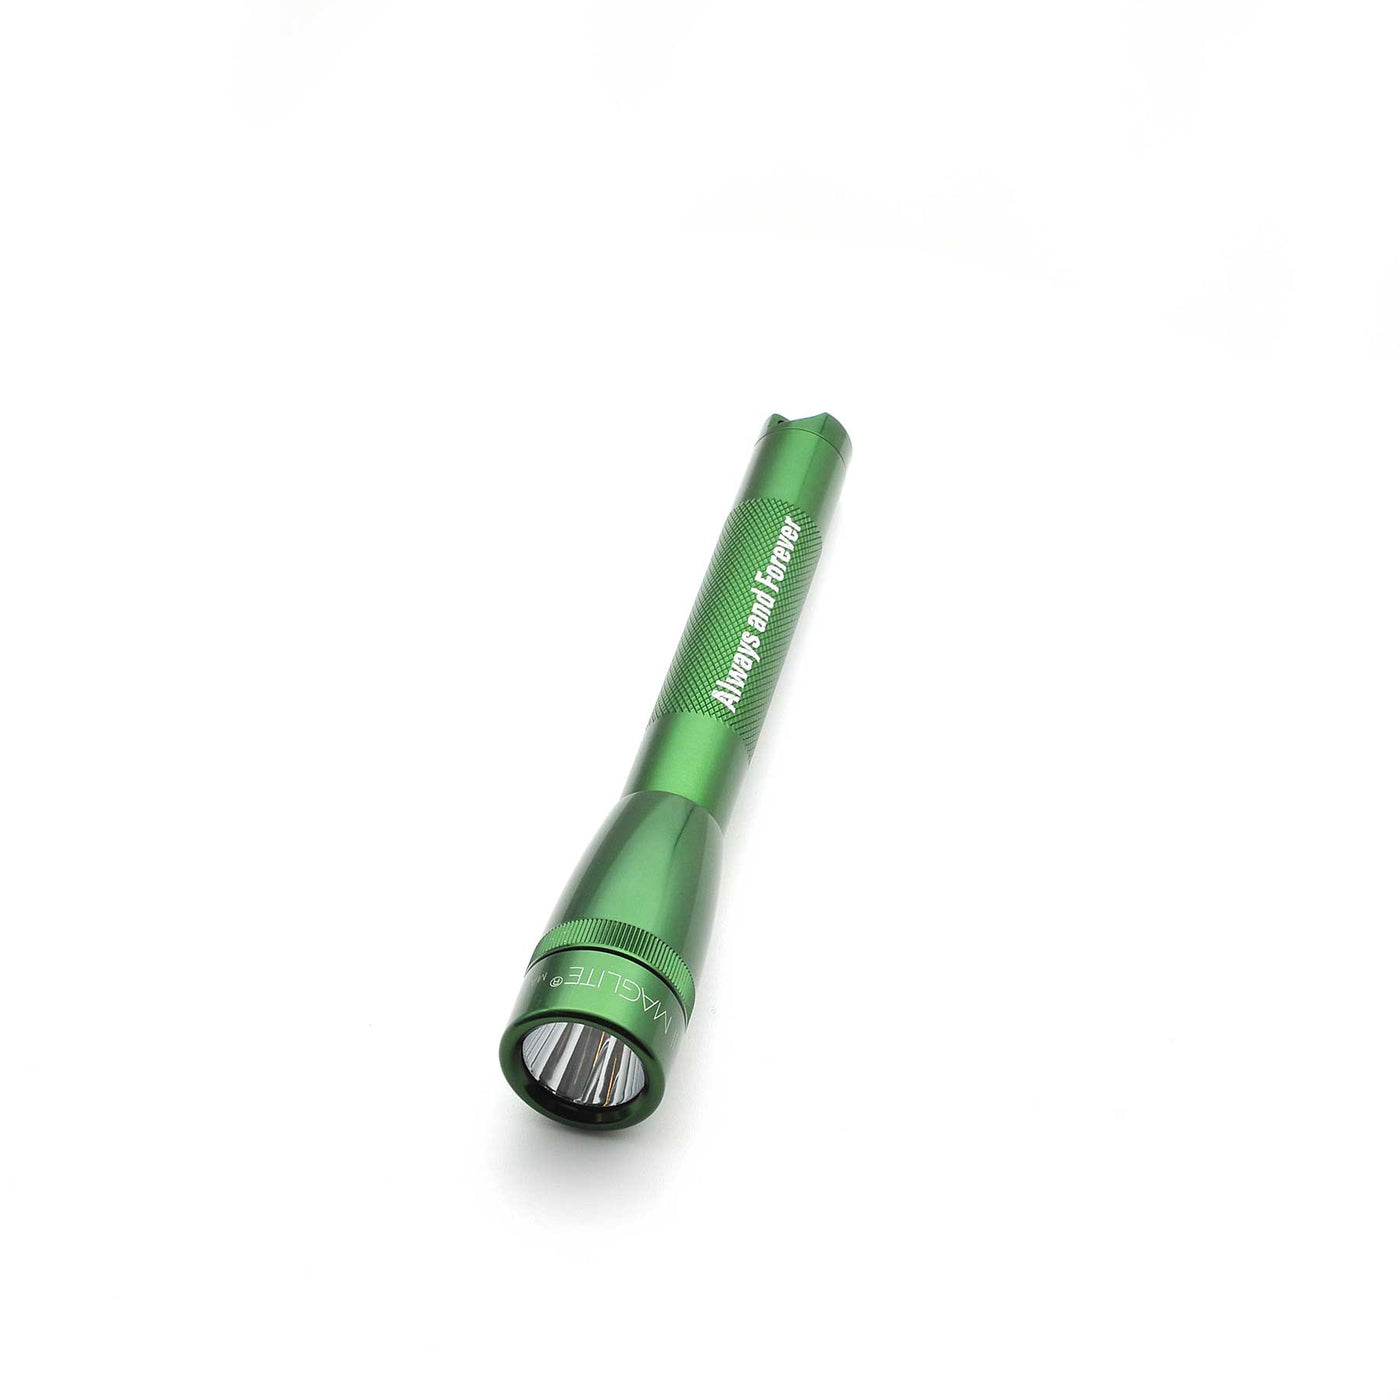 Mini Maglite Pro LED - Always and Forever - Pocket / Purse Flashlight - Green